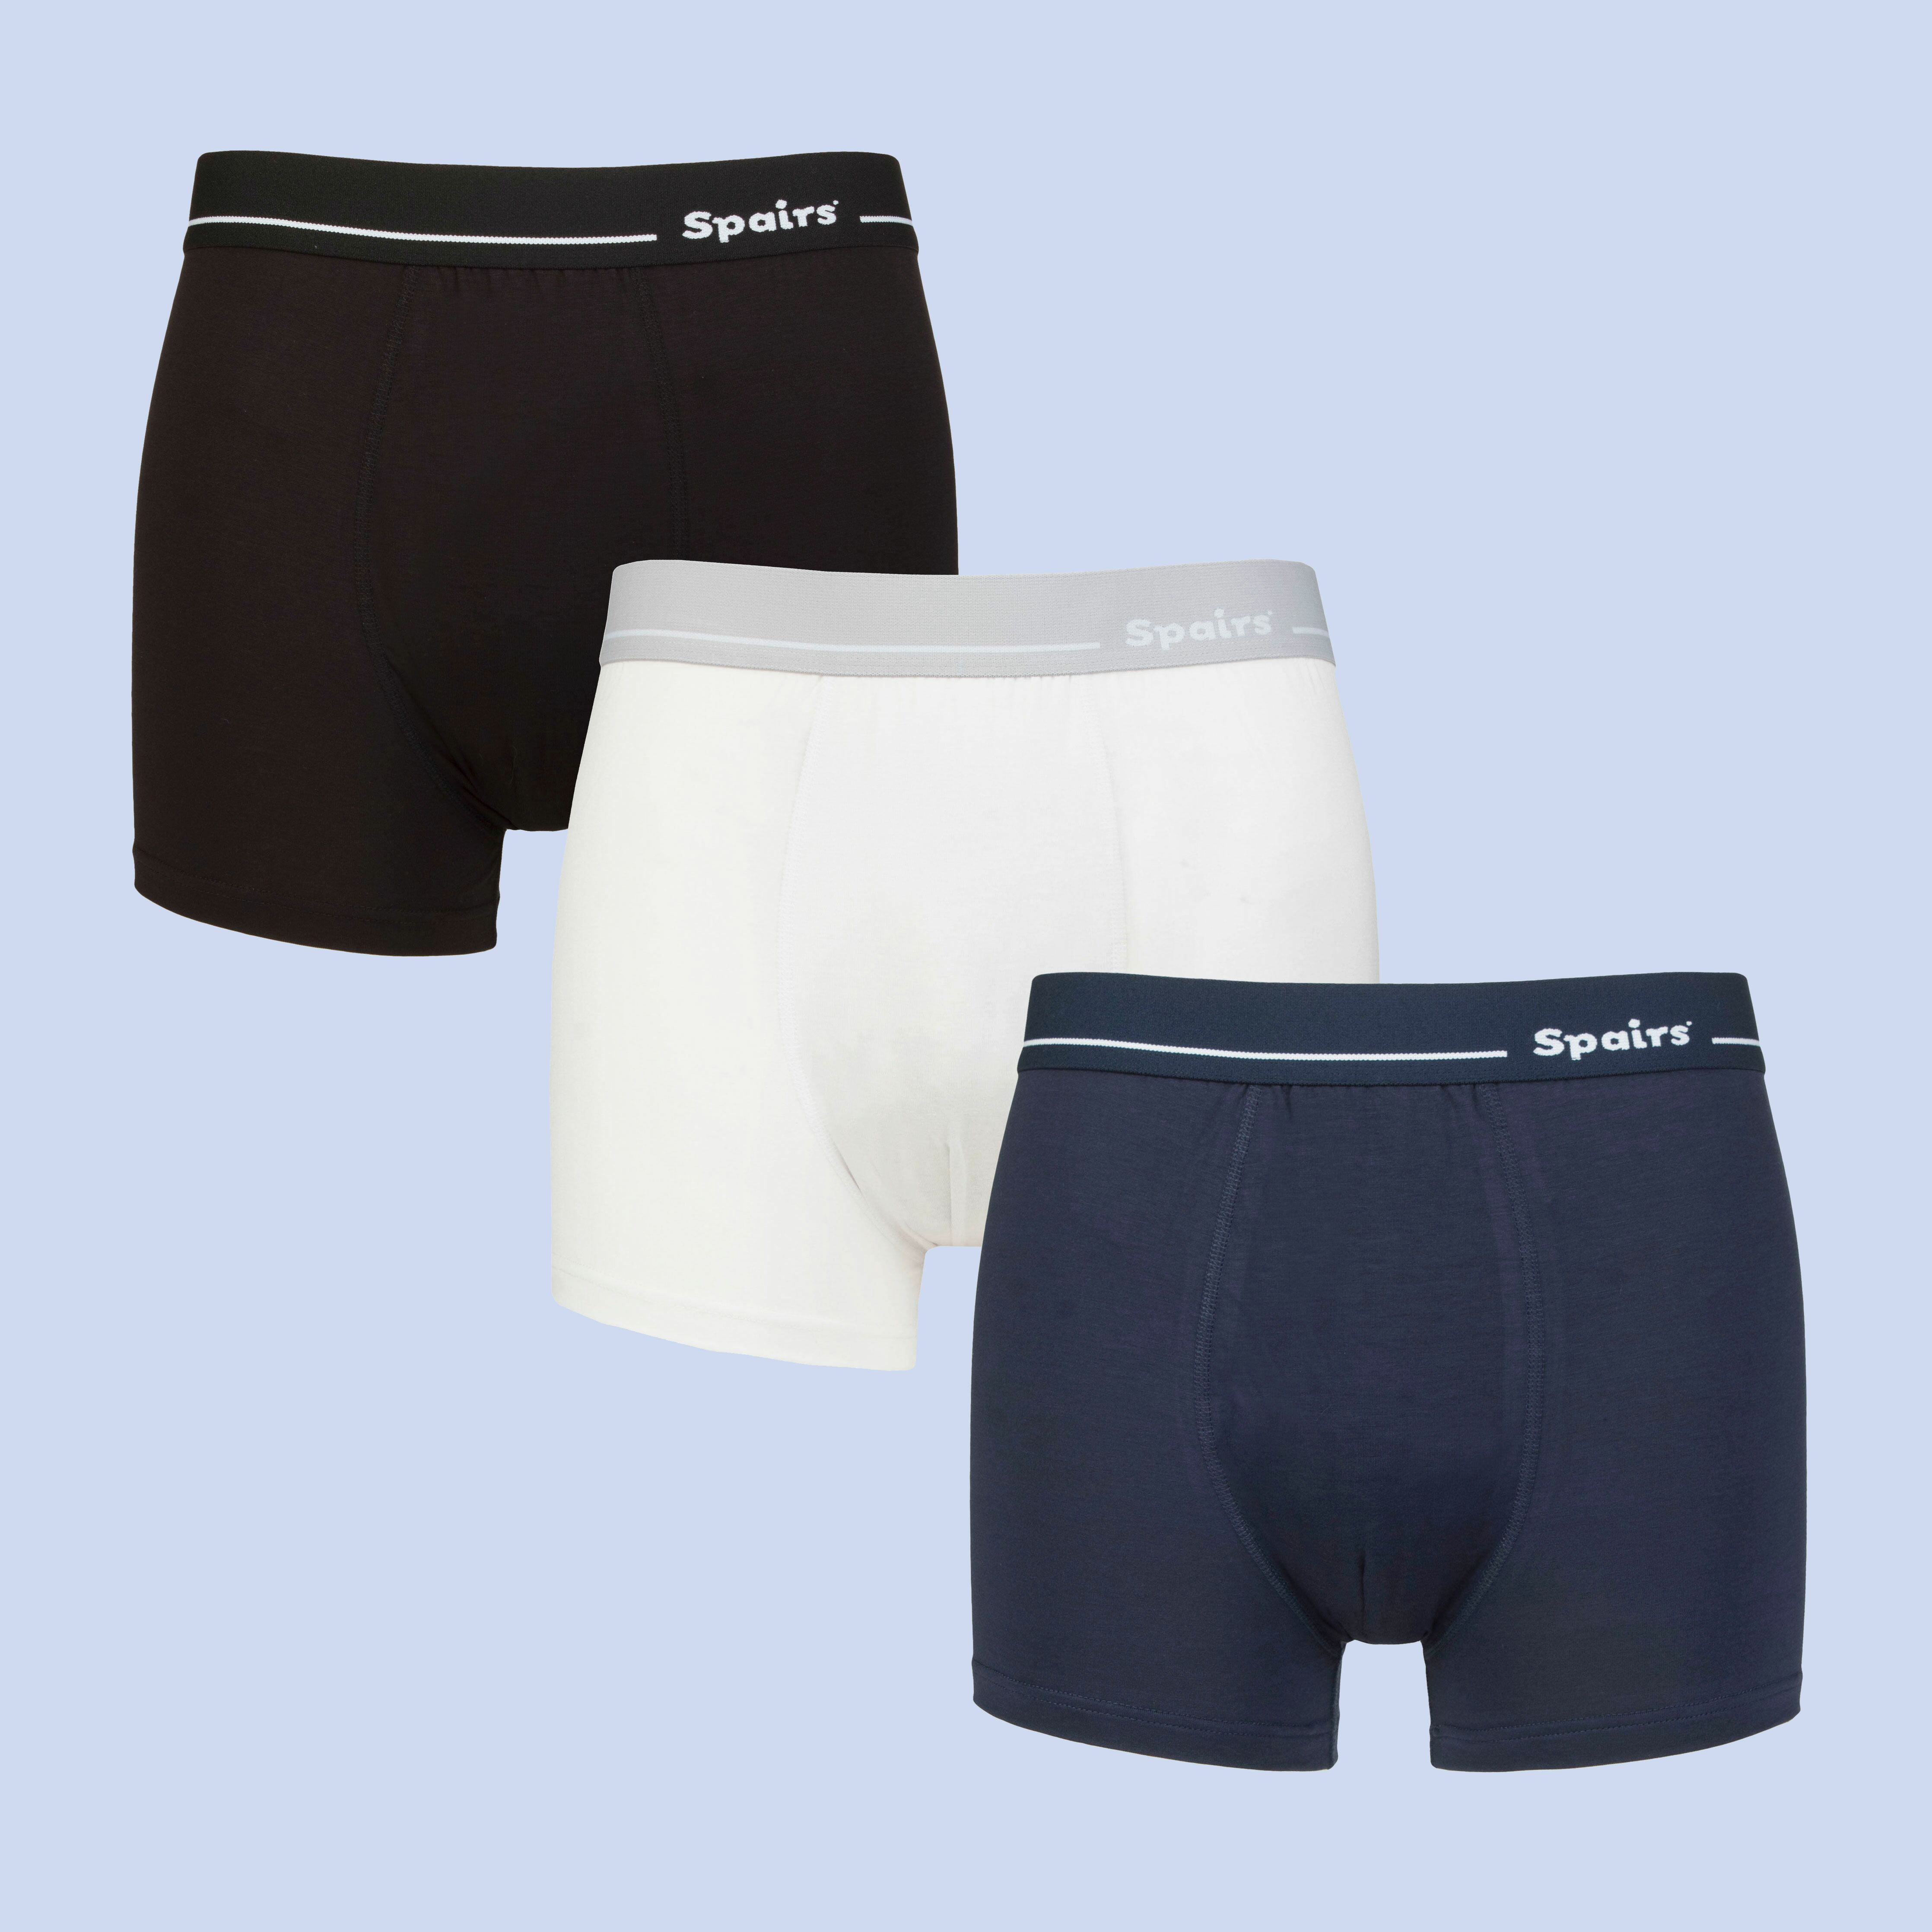 Spairs | Affordable, Comfortable Socks and Underwear – Spairs.co.uk ...